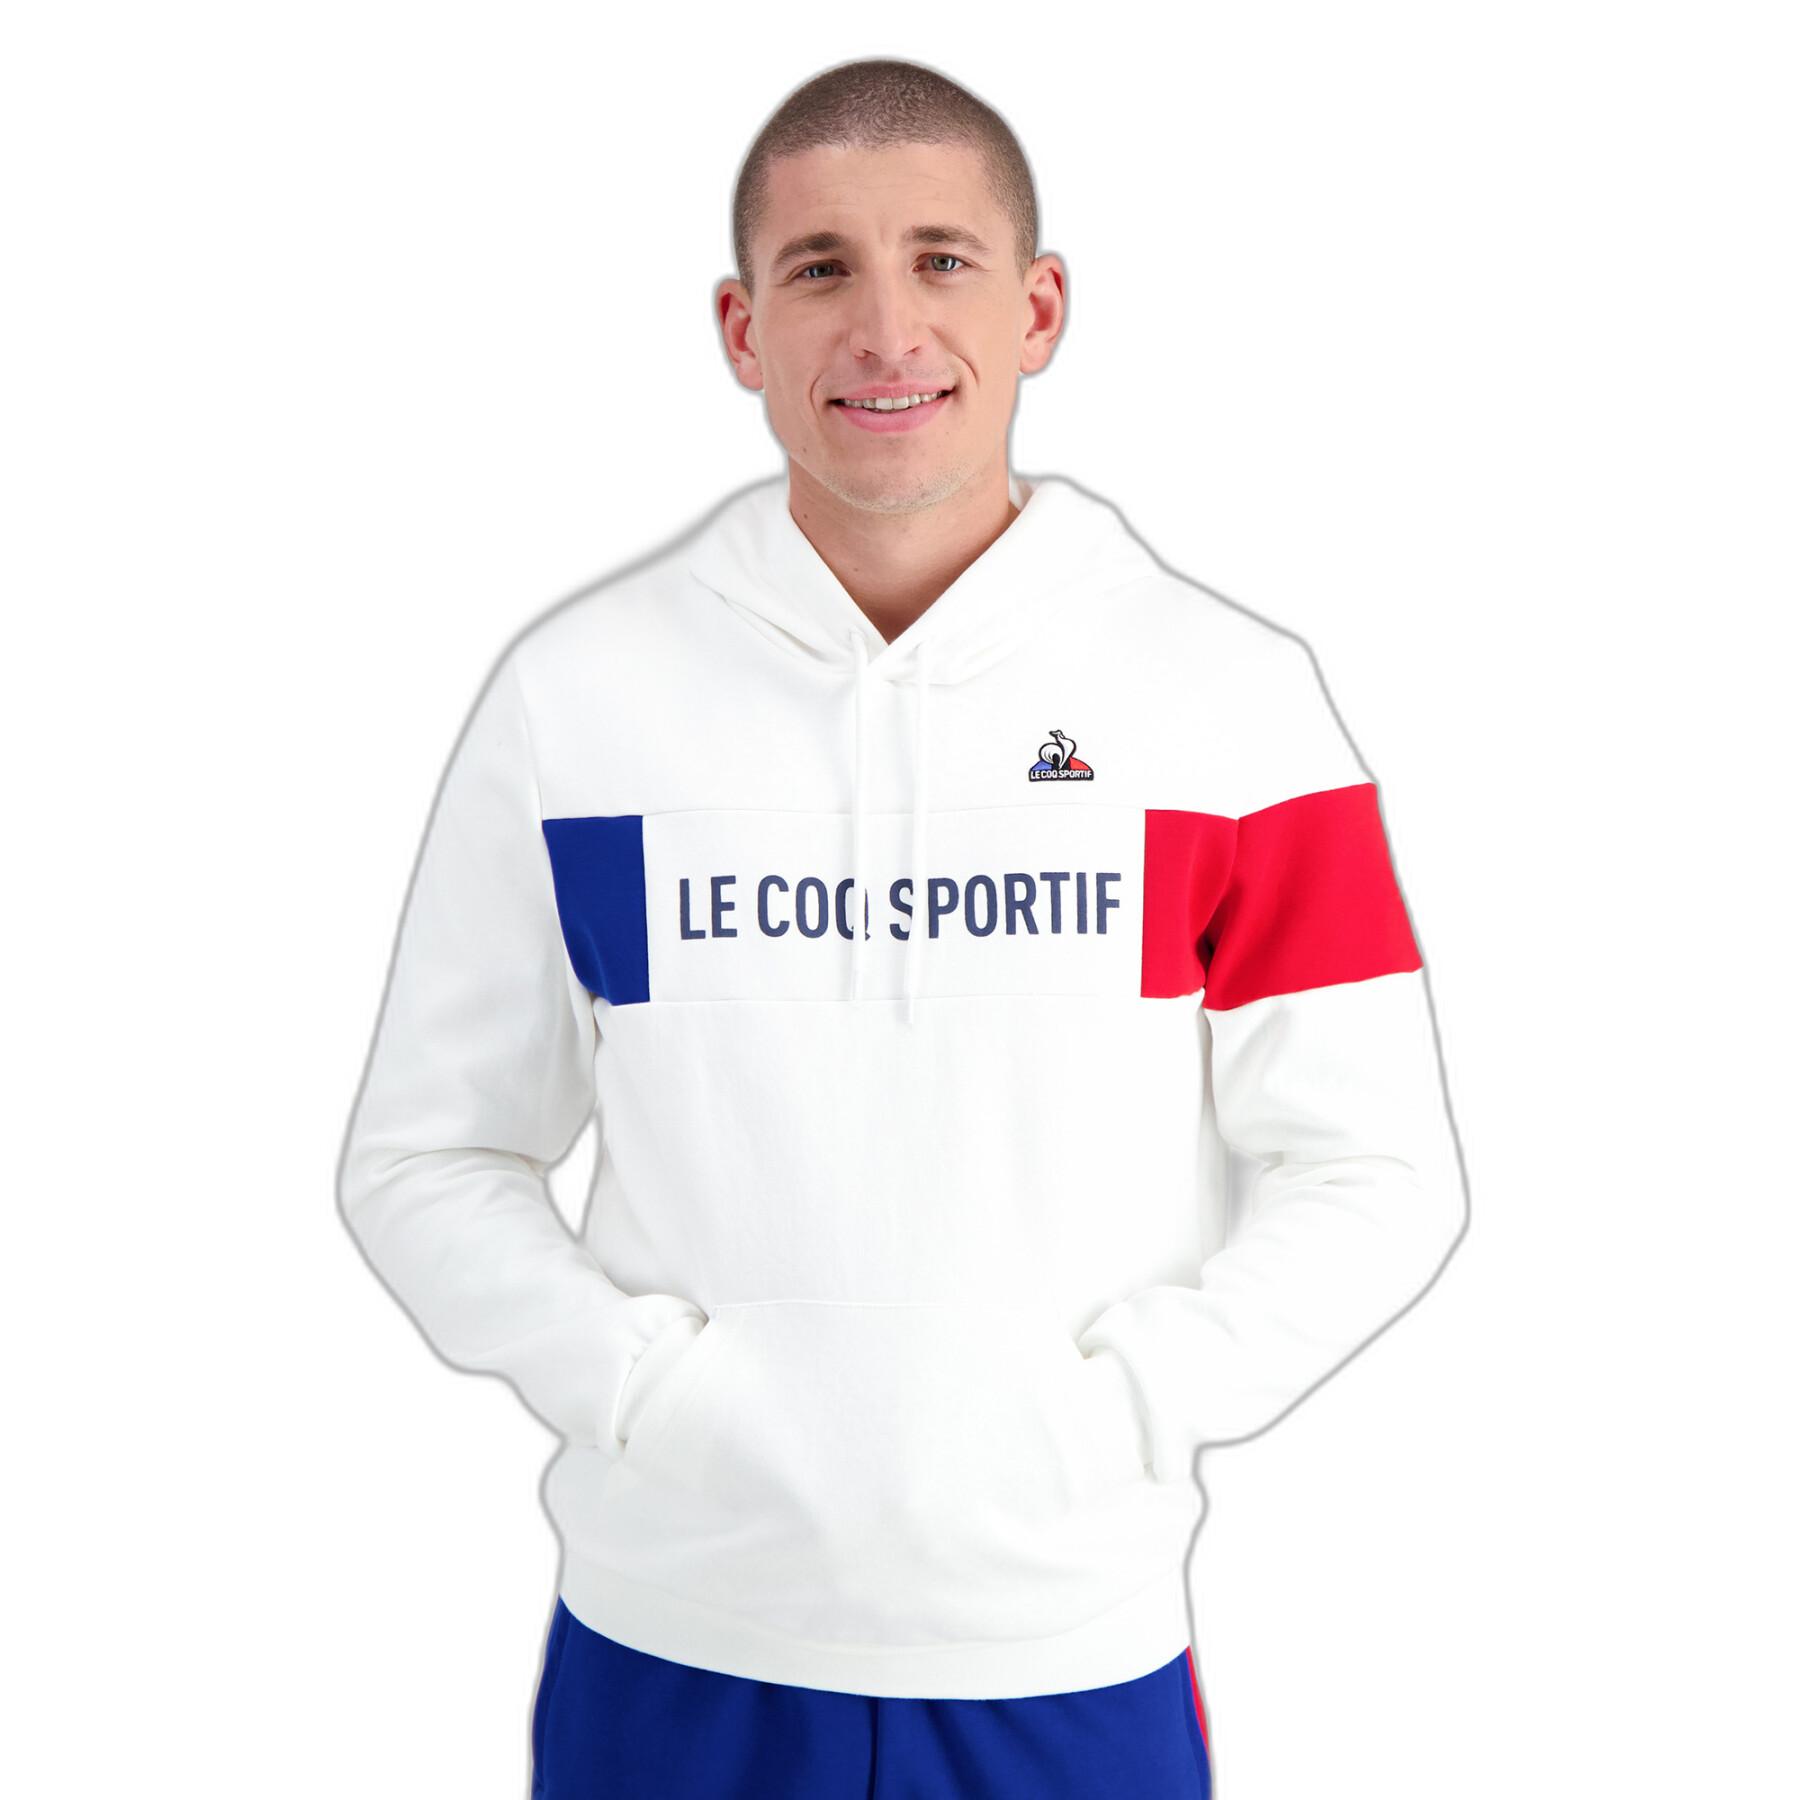 Sweatshirt à capuche Le Coq Sportif N°1